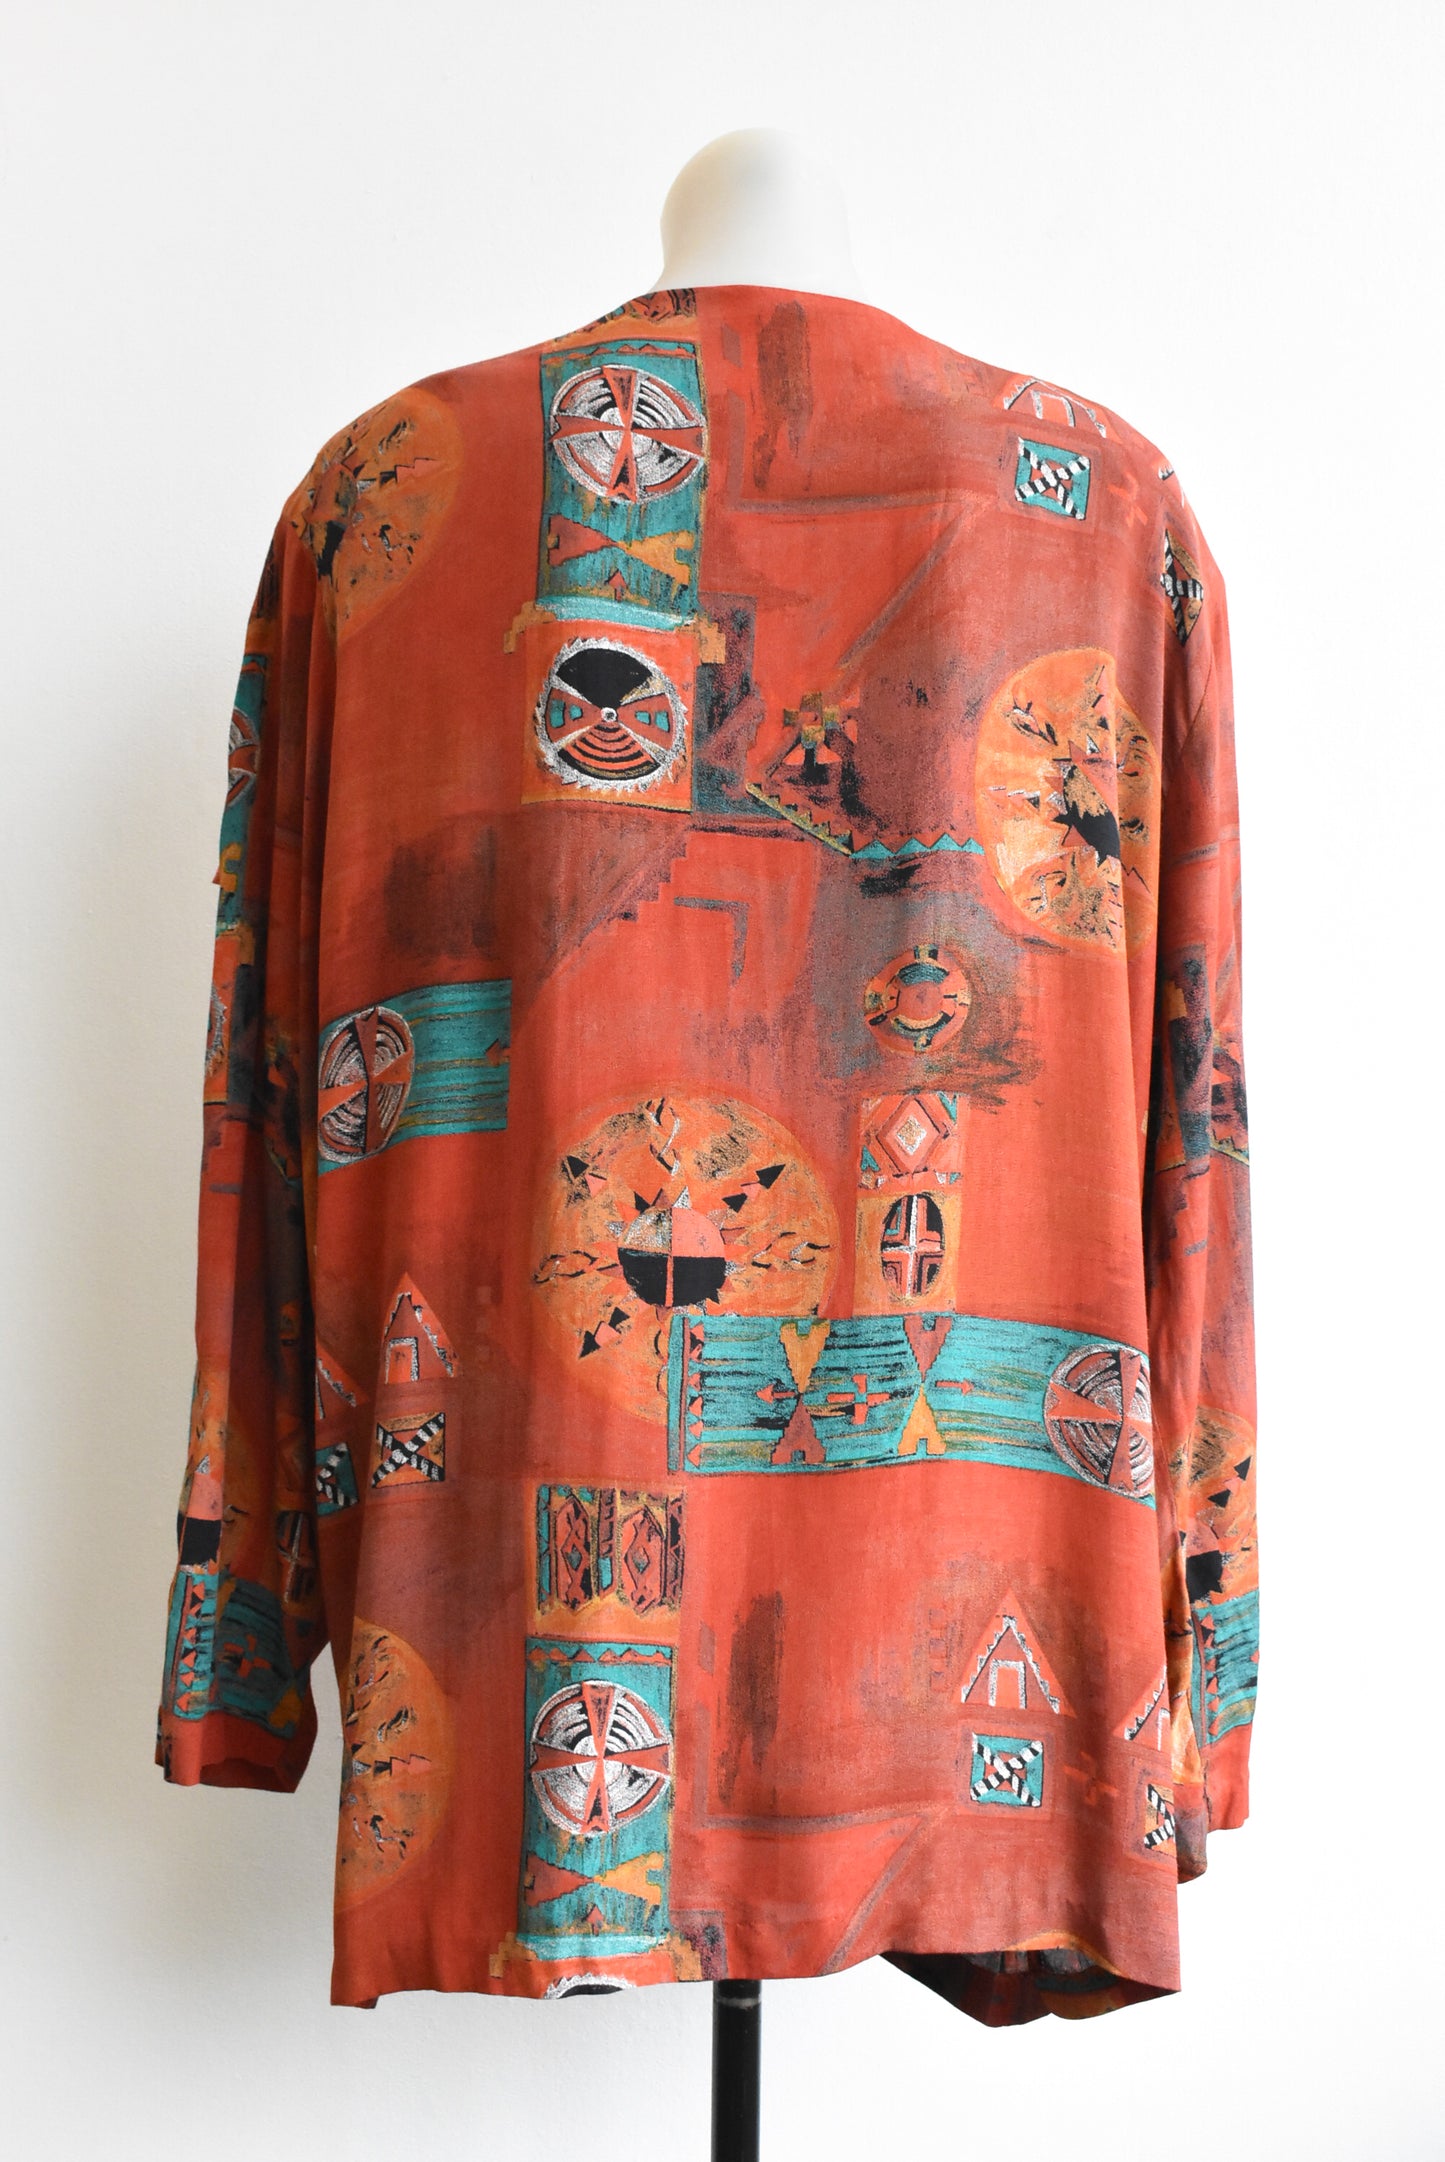 Retro 90s bohemian tribal shoulder pad jacket, size L